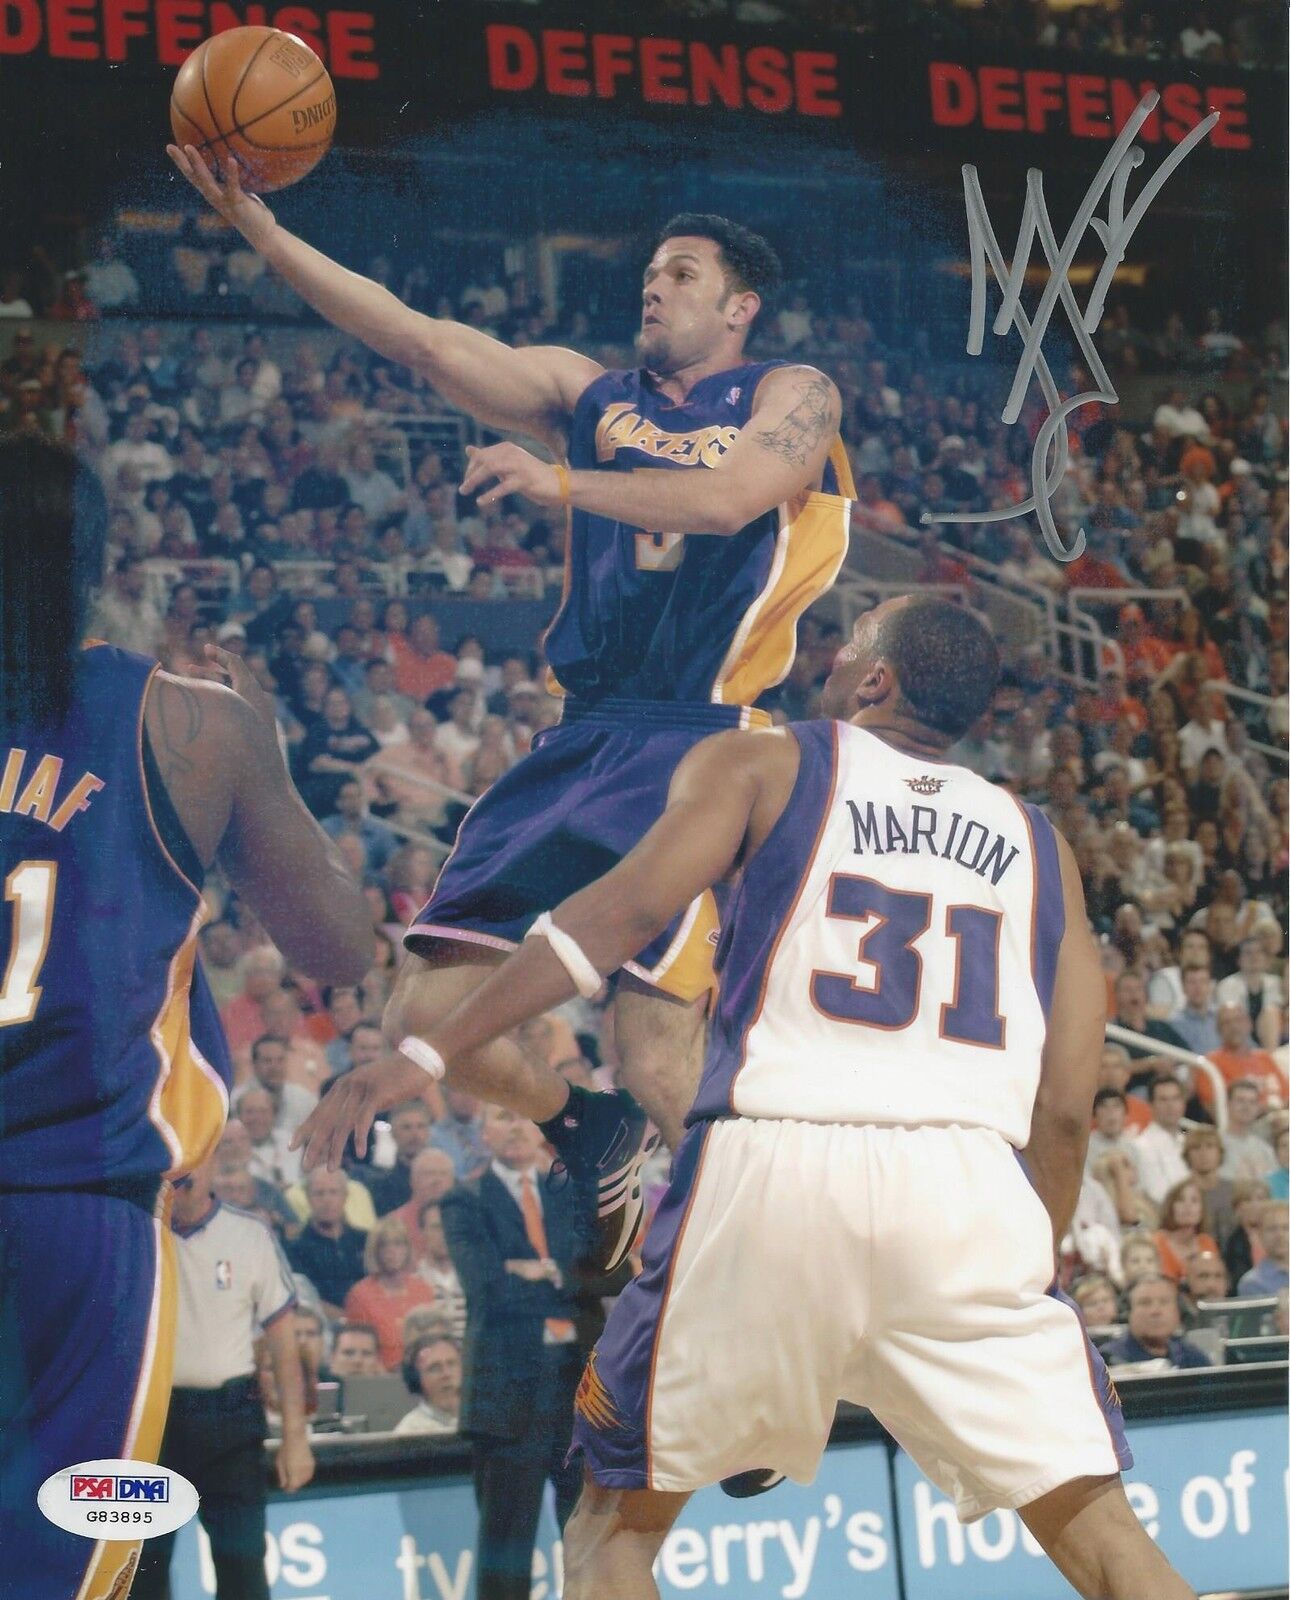 Jordan Farmar Los Angeles Lakers signed 8x10 Photo Poster painting PSA/DNA #G83895